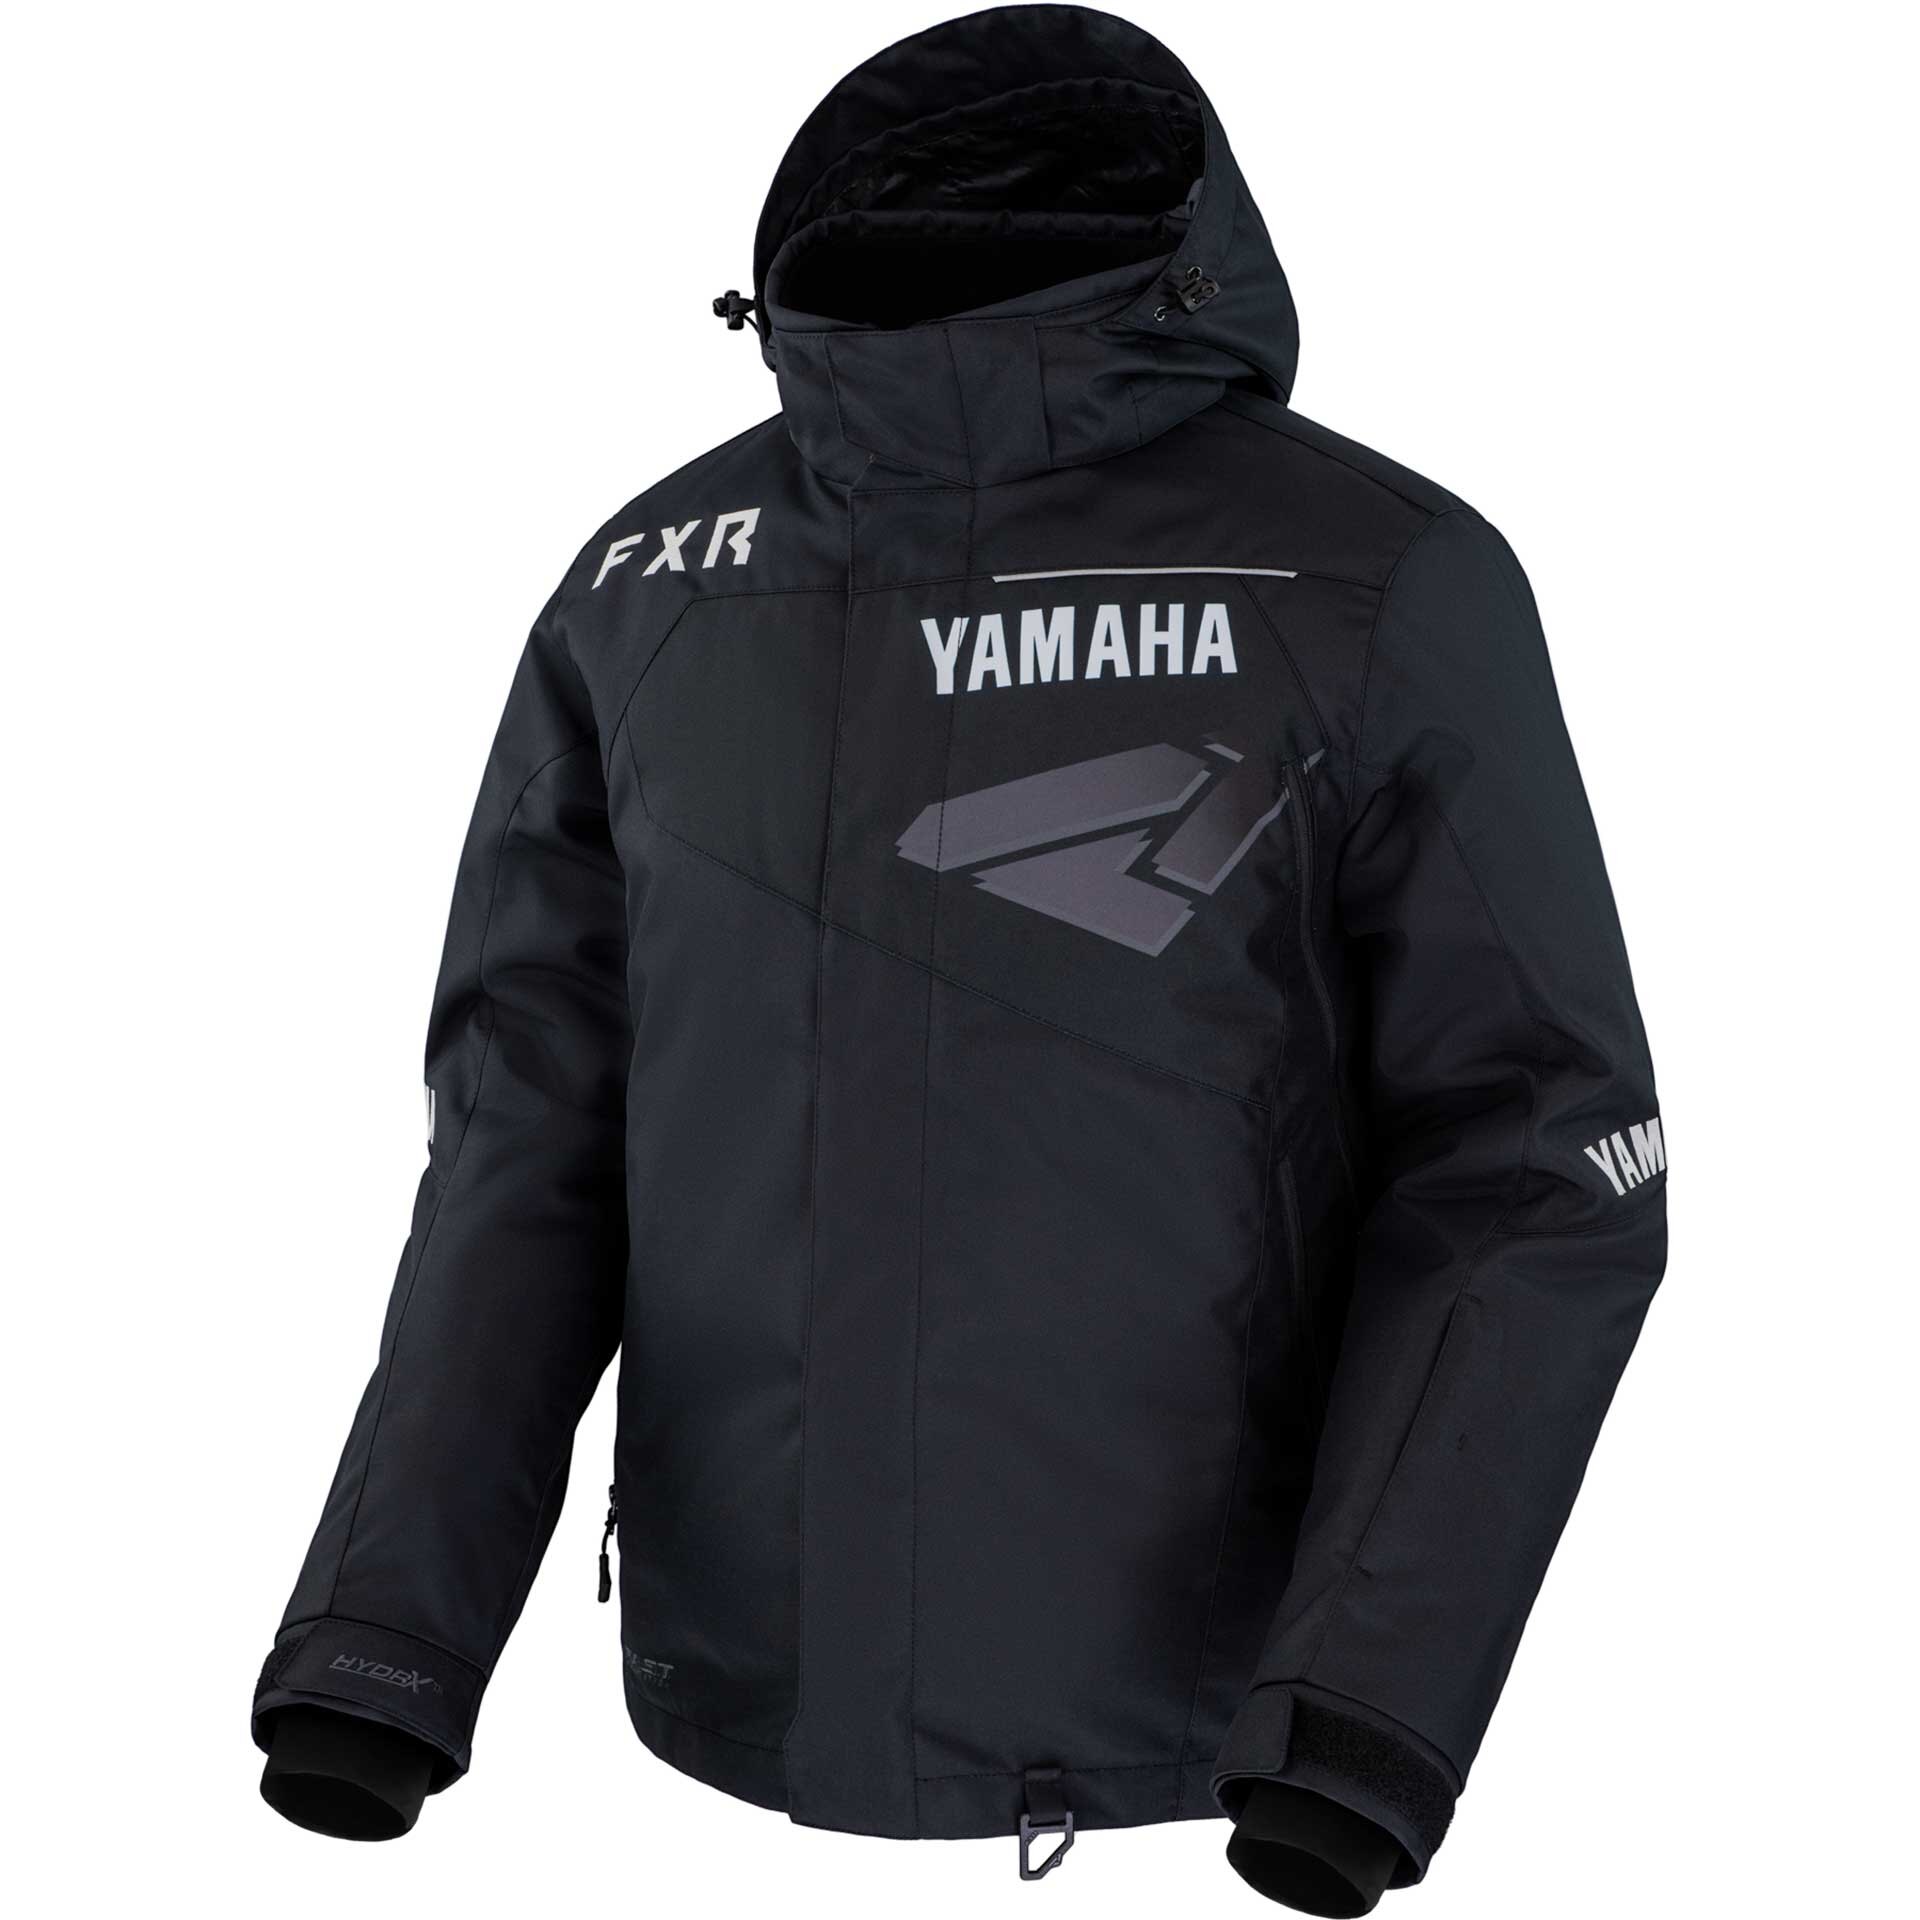 Yamaha Fuel LE Jacket by FXR®